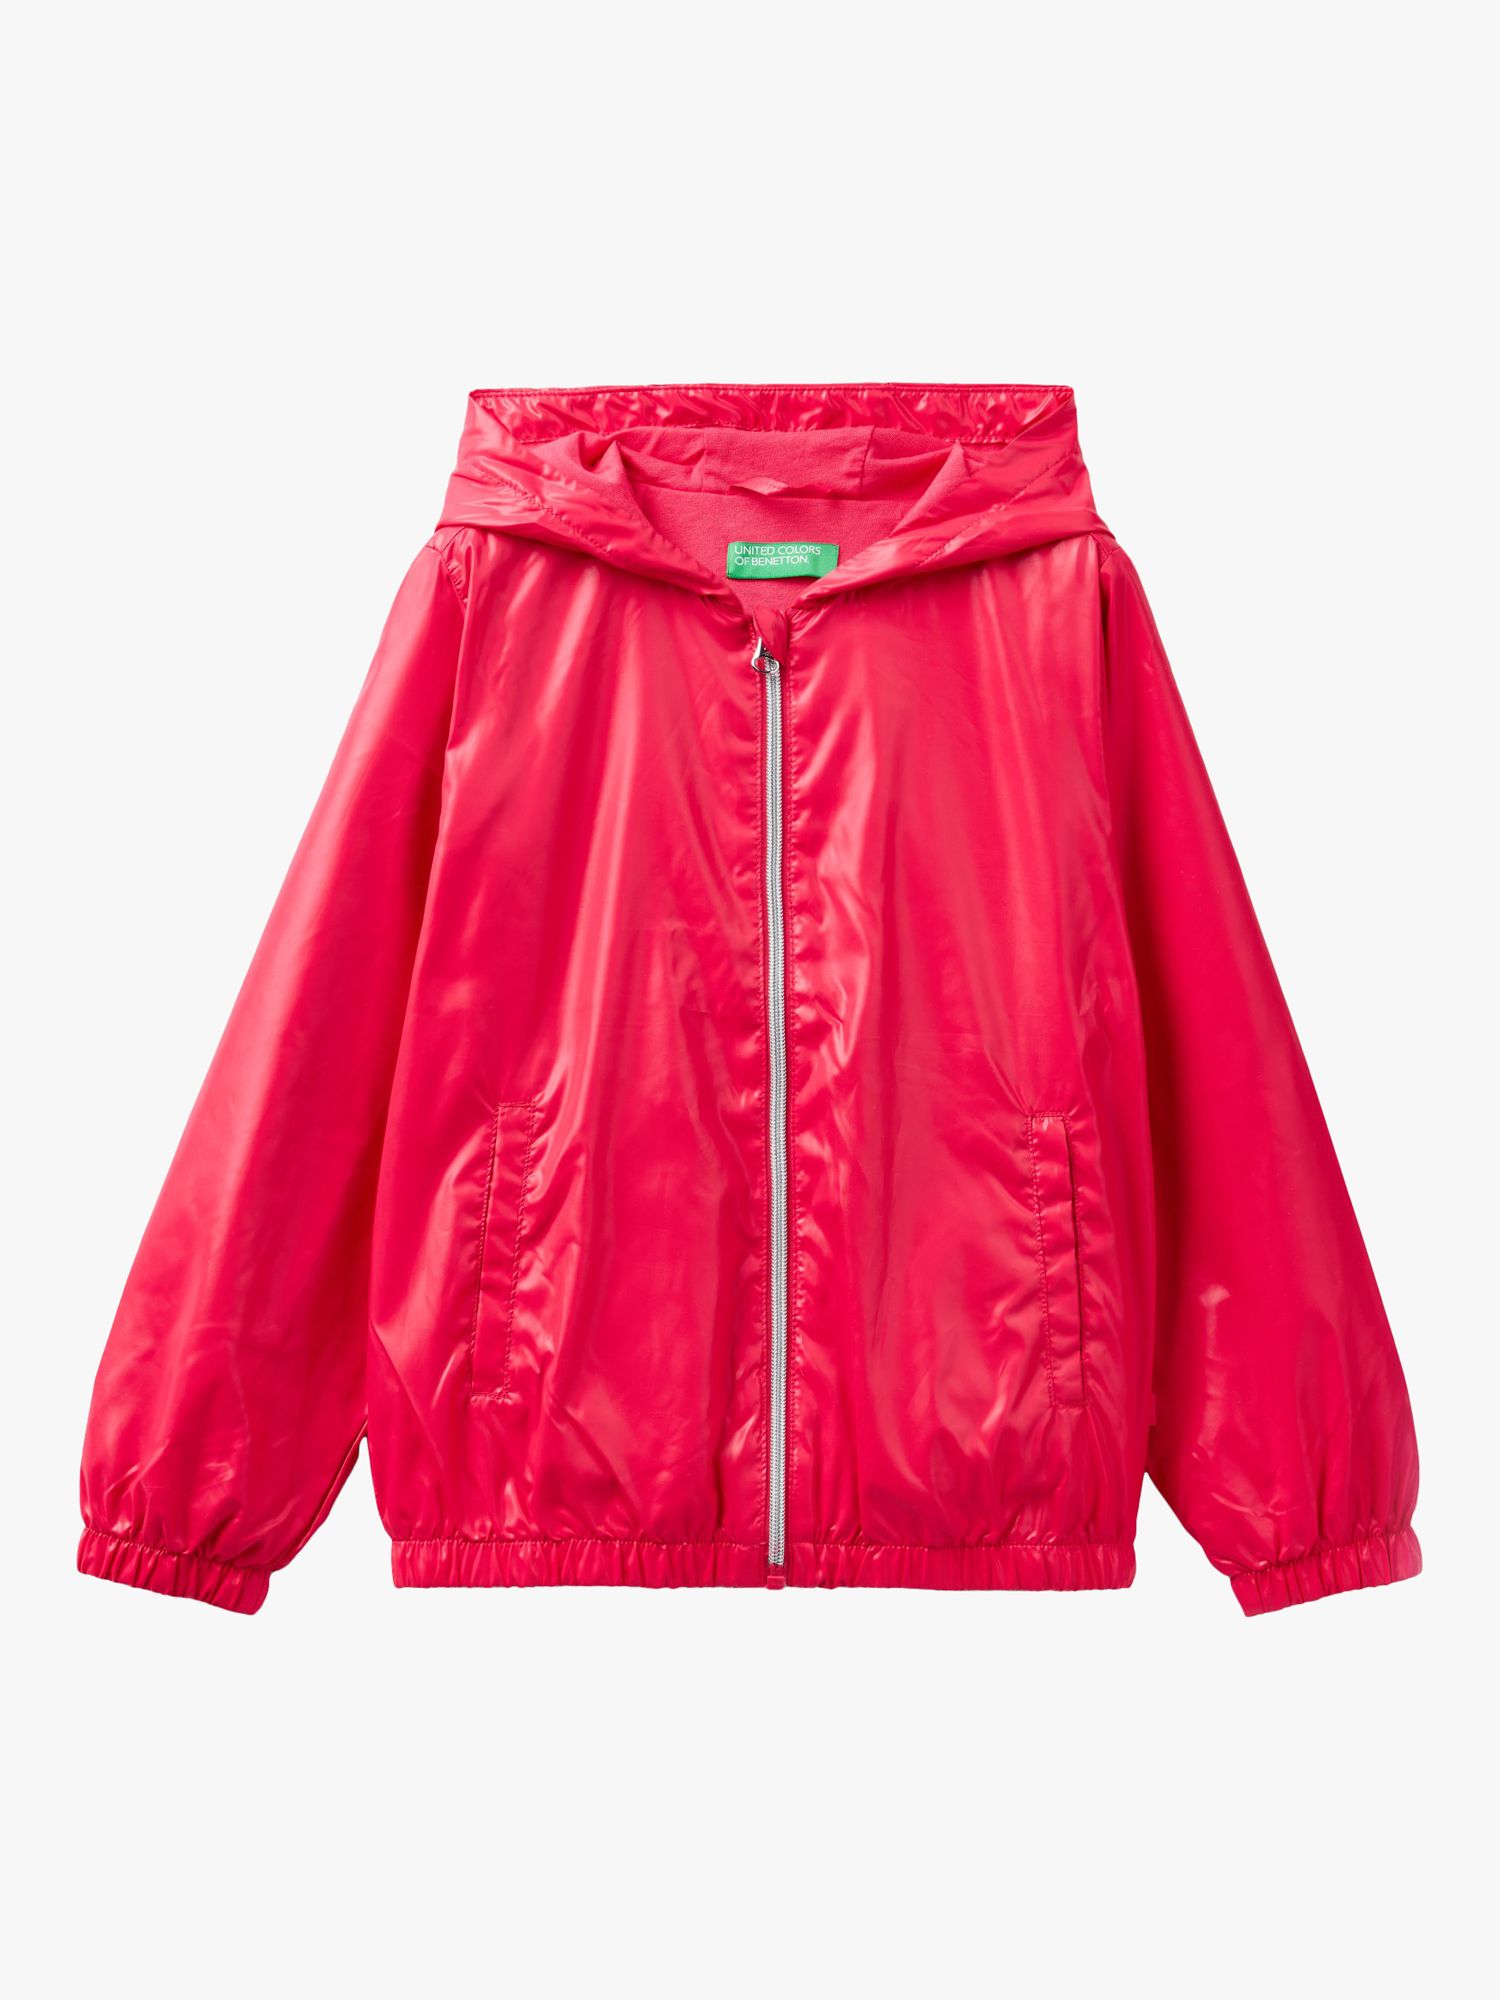 Benetton Kids' Hooded Rain Jacket, Magenta Red, 6-7 years